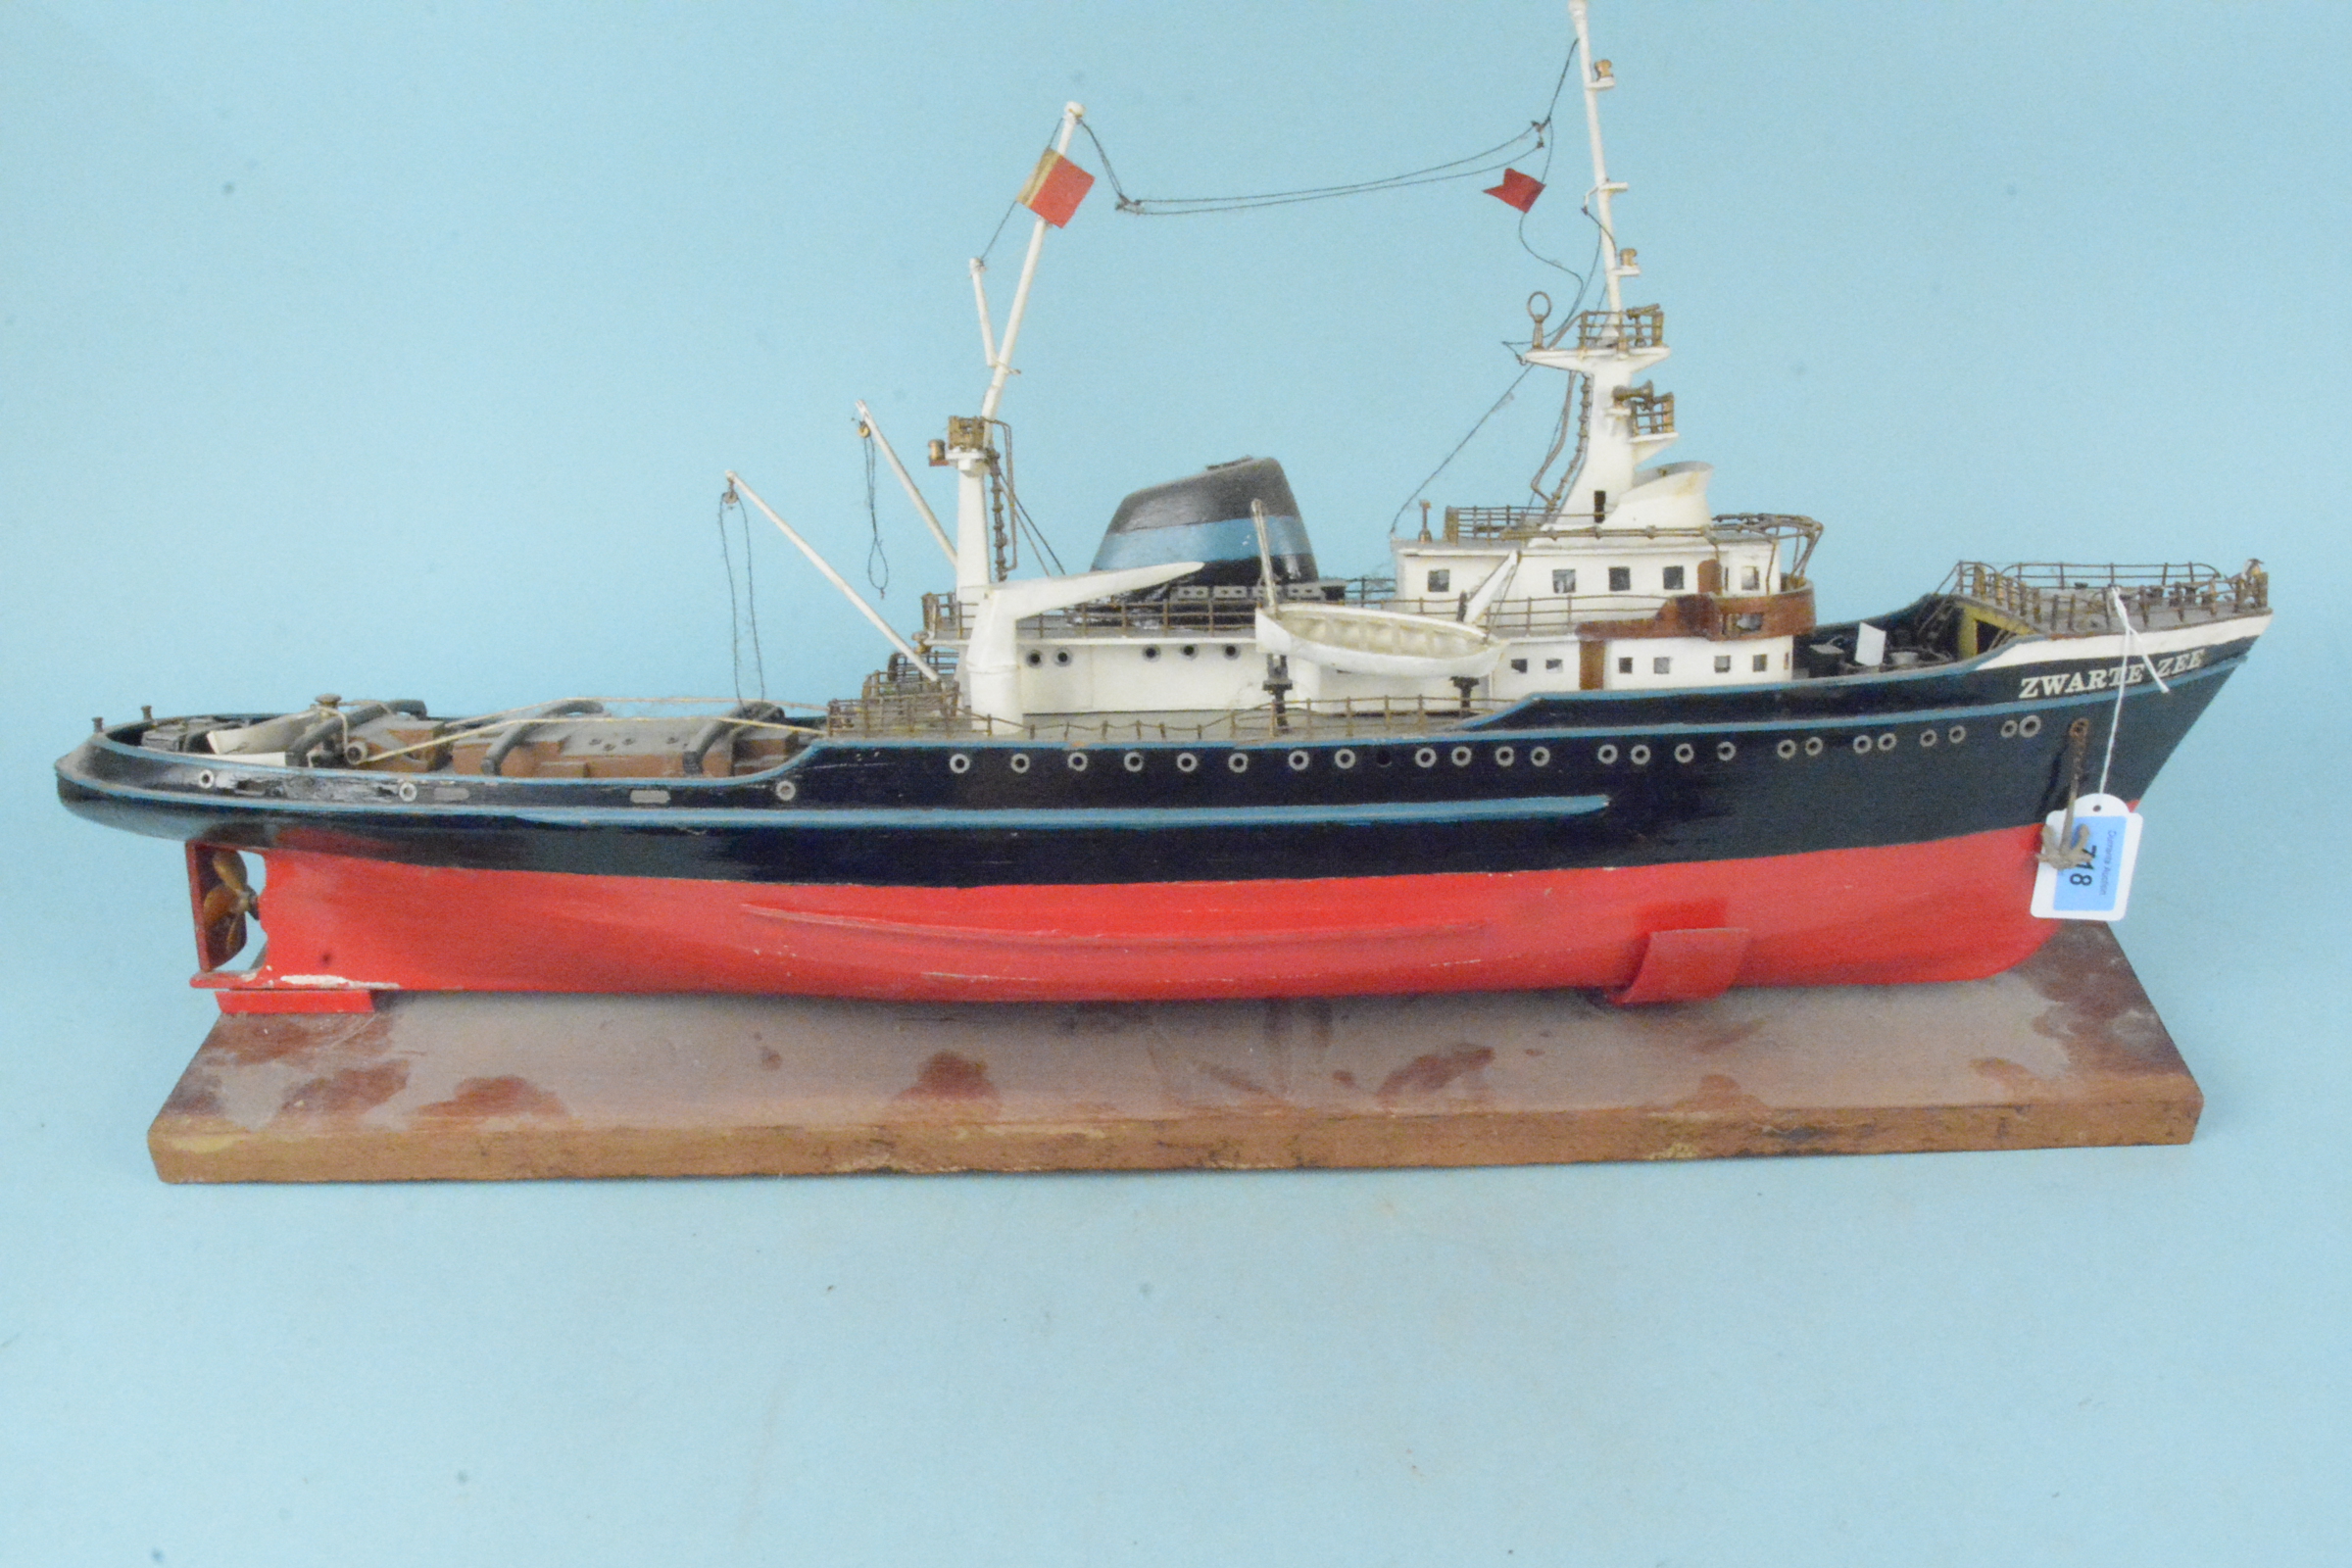 A large wooden model, probably Billing Boats, of the tug boat 'Zwarte-Zee',